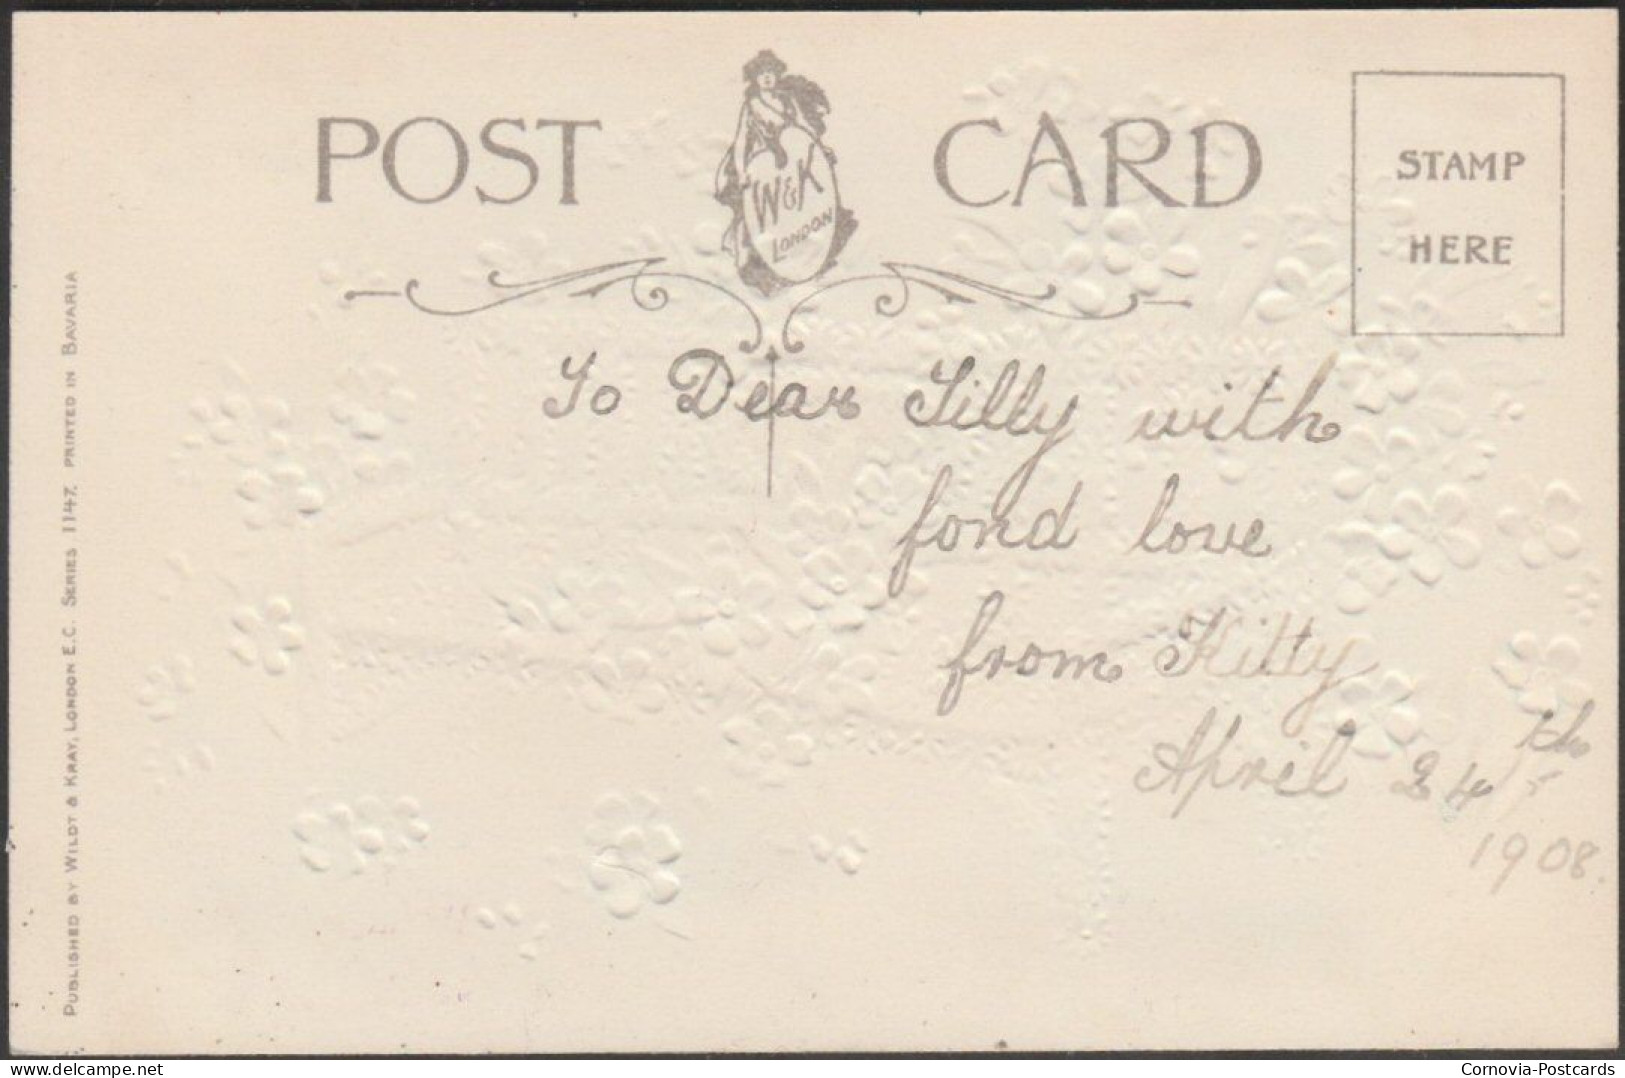 Kind Regards From Pinner, Middlesex, 1908 - Wildt & Kray Postcard - Middlesex